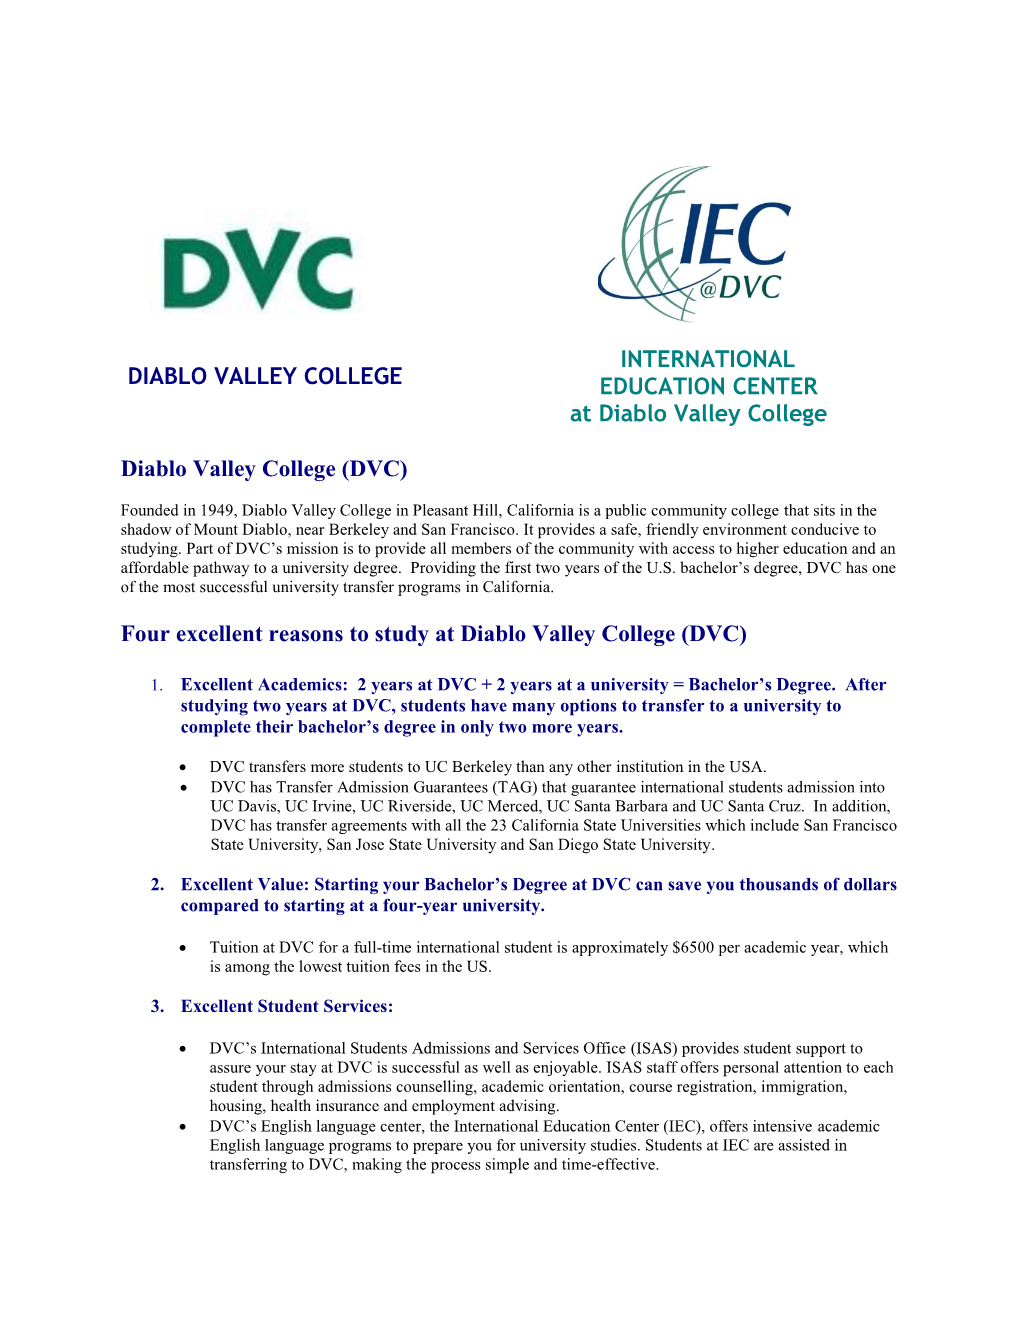 Diablo Valley College (DVC) Four Excellent Reasons to Study at Diablo